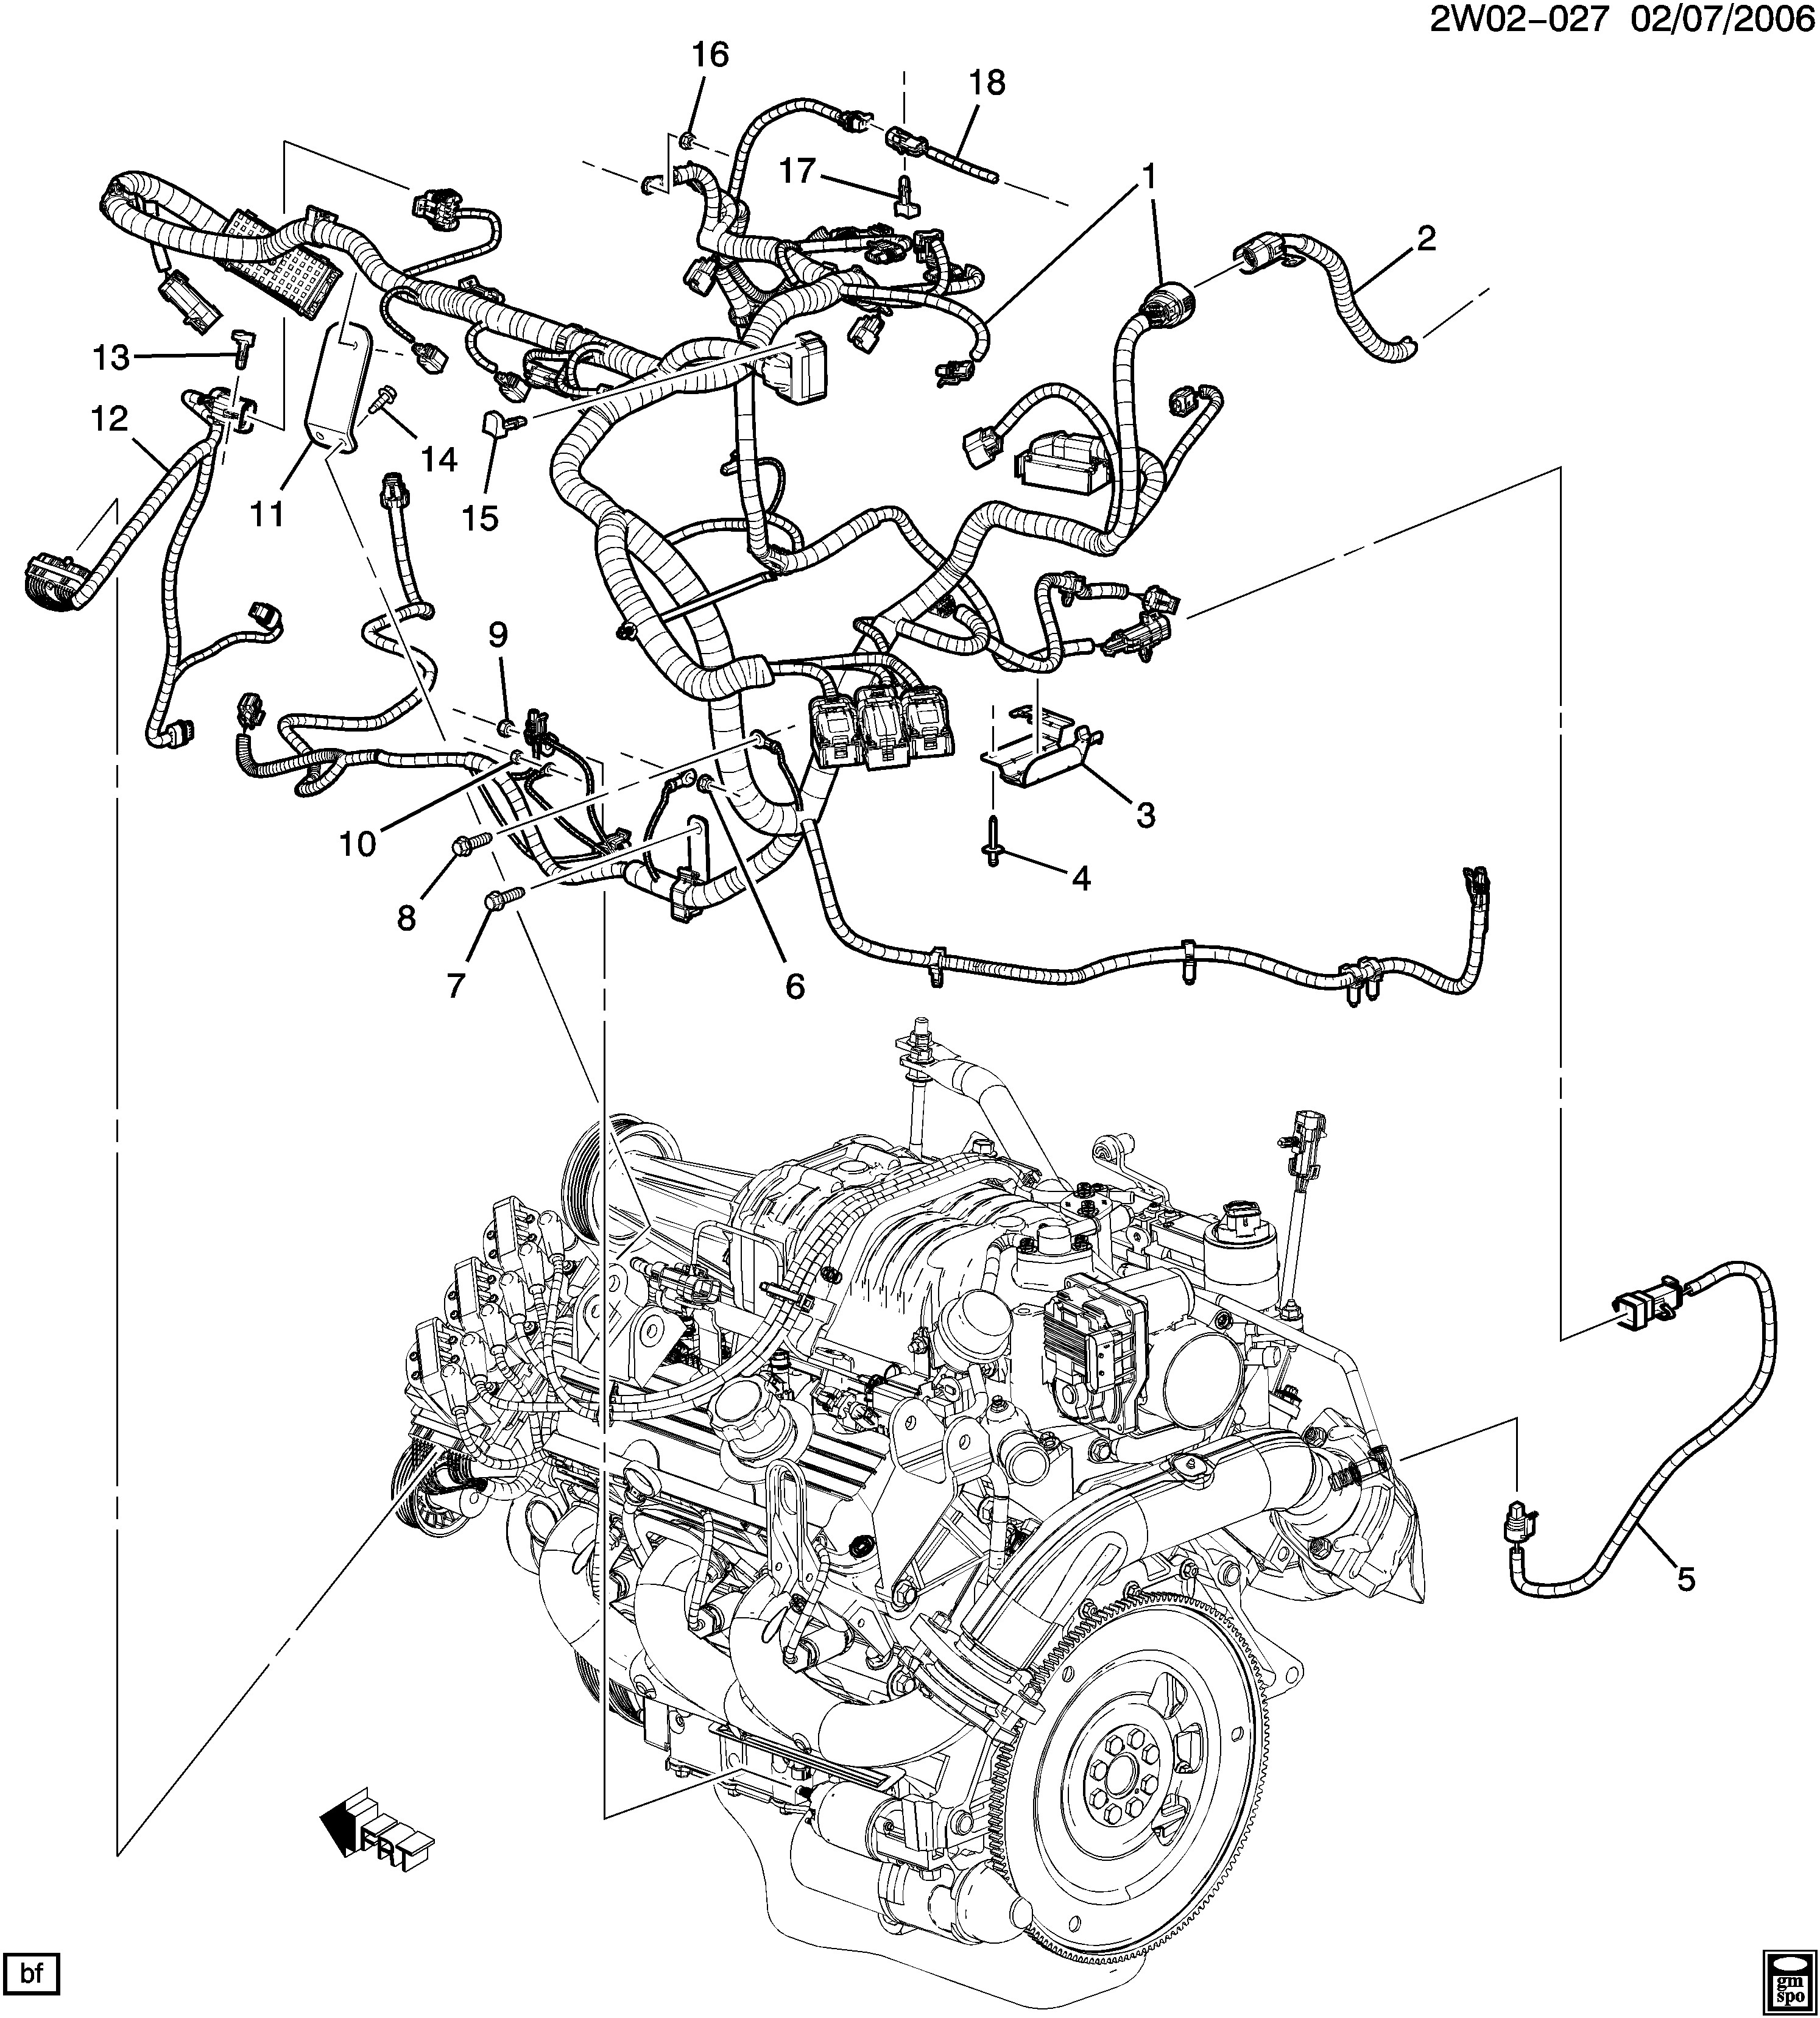 Pontiac Grand Prix Engine Diagram Pontiac Grand Prix W Wiring Harness Engine L32 3 8 4 Epc Of Pontiac Grand Prix Engine Diagram